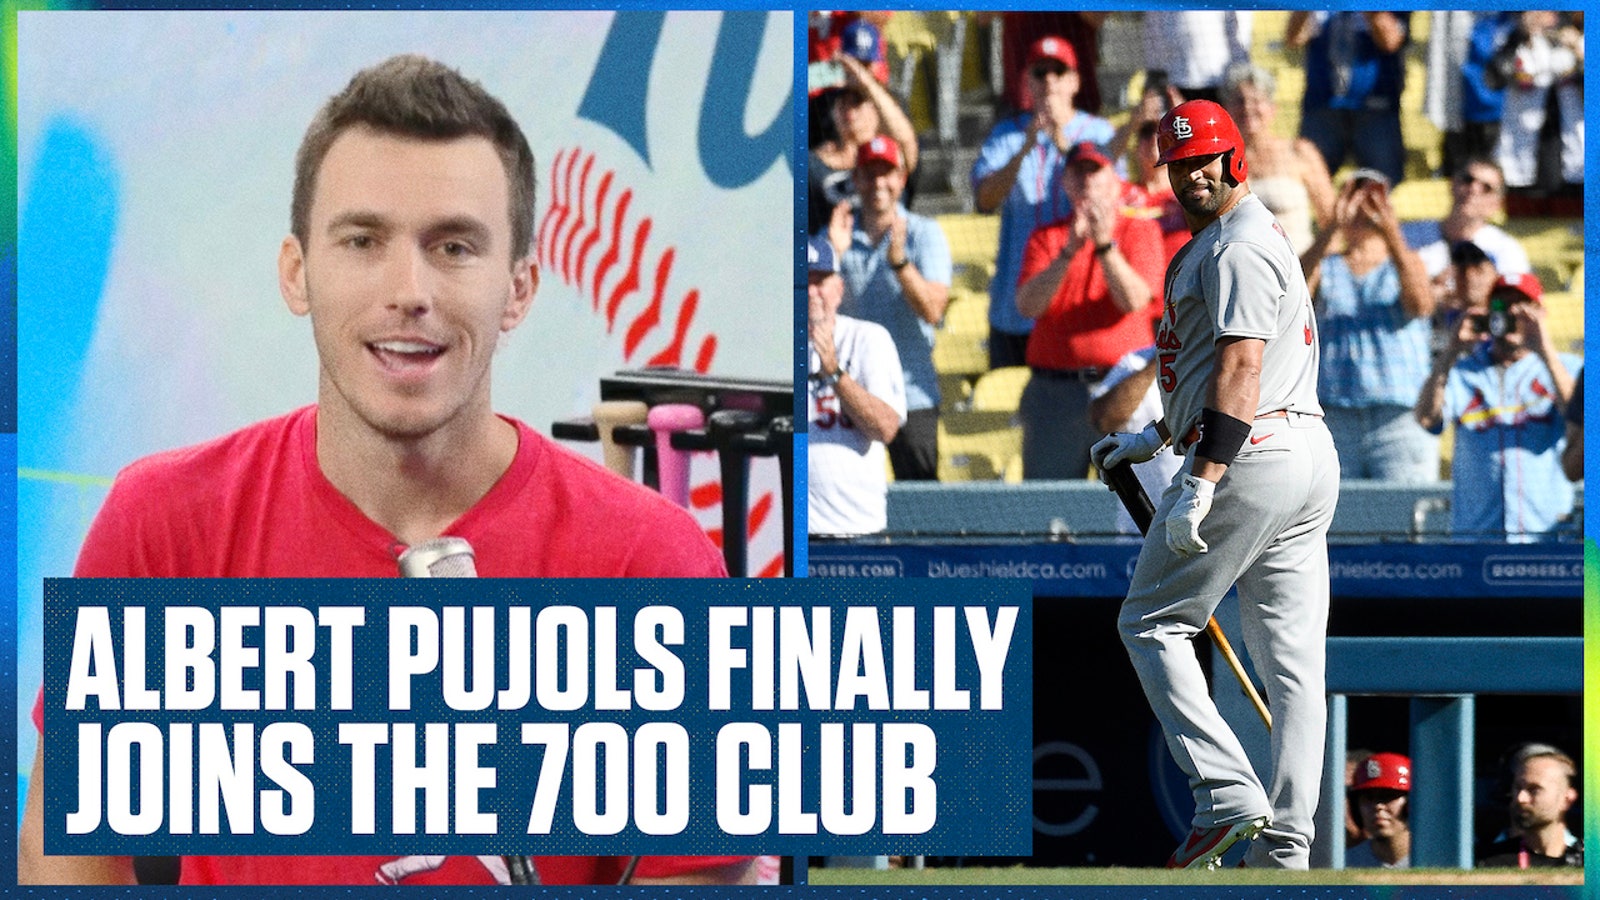 Albert Pujols joins 700 home run club